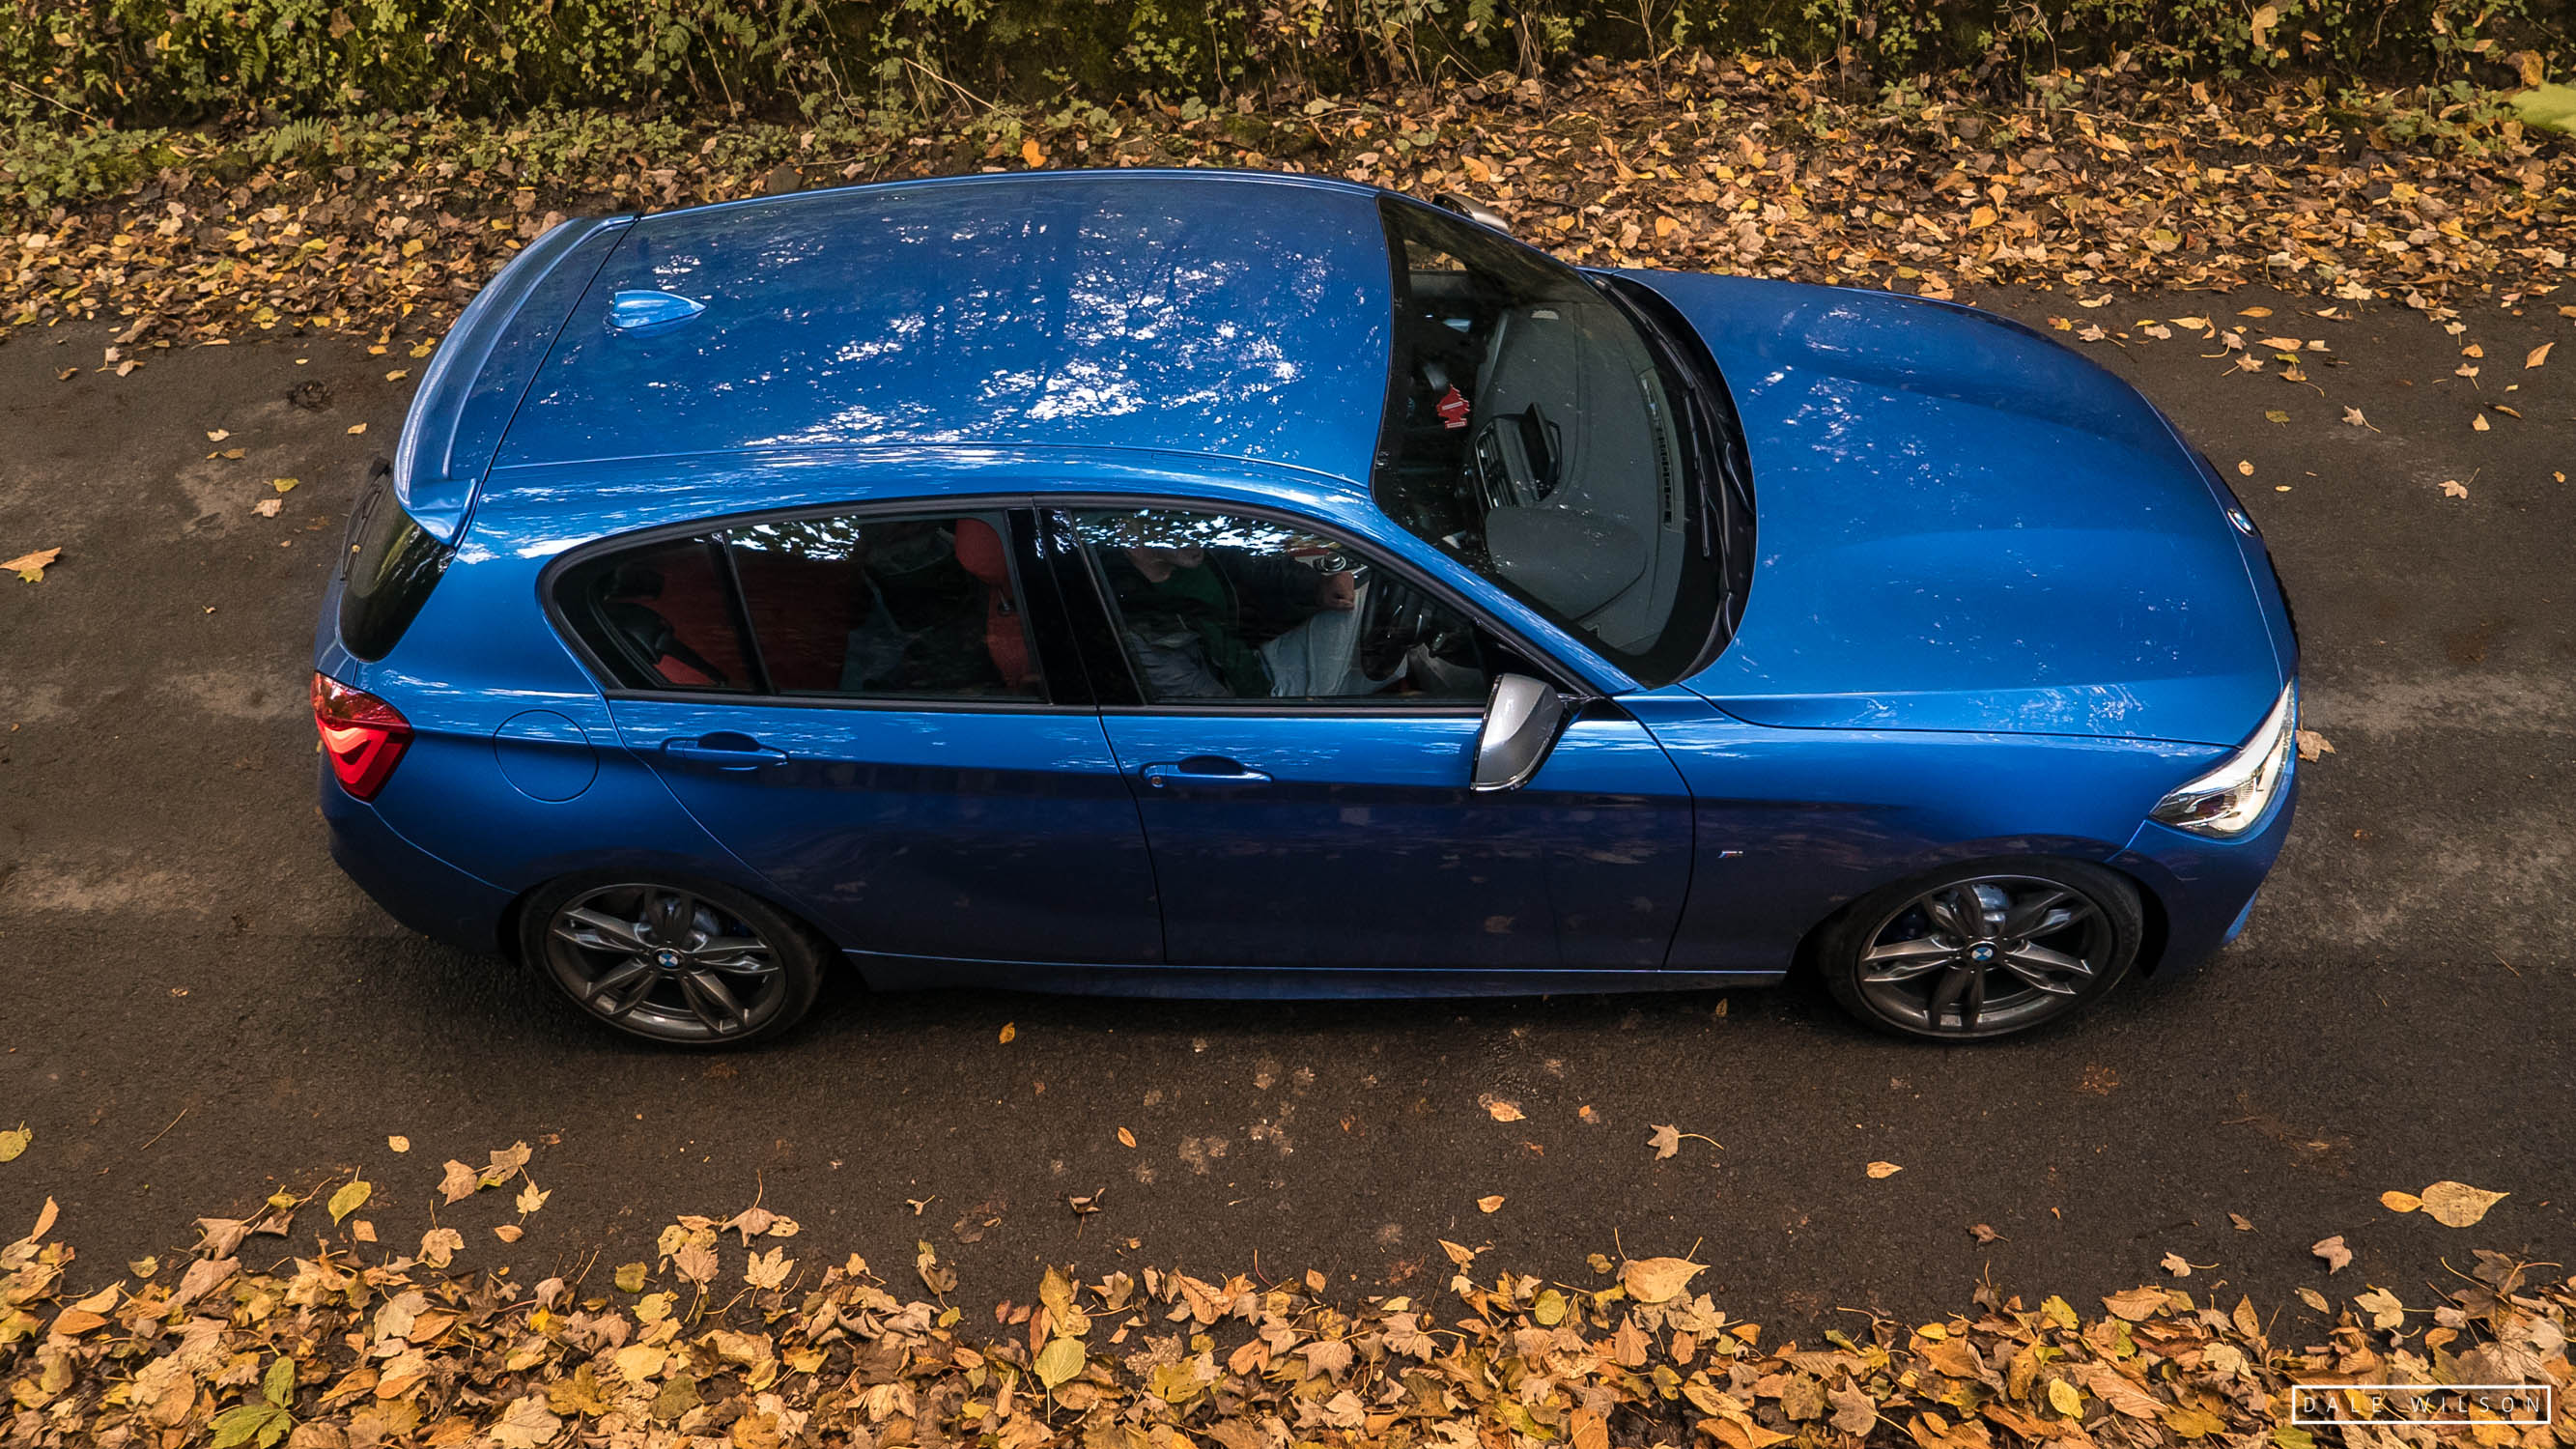 An Estoril blue BMW 135i in autumn leaves cumbria